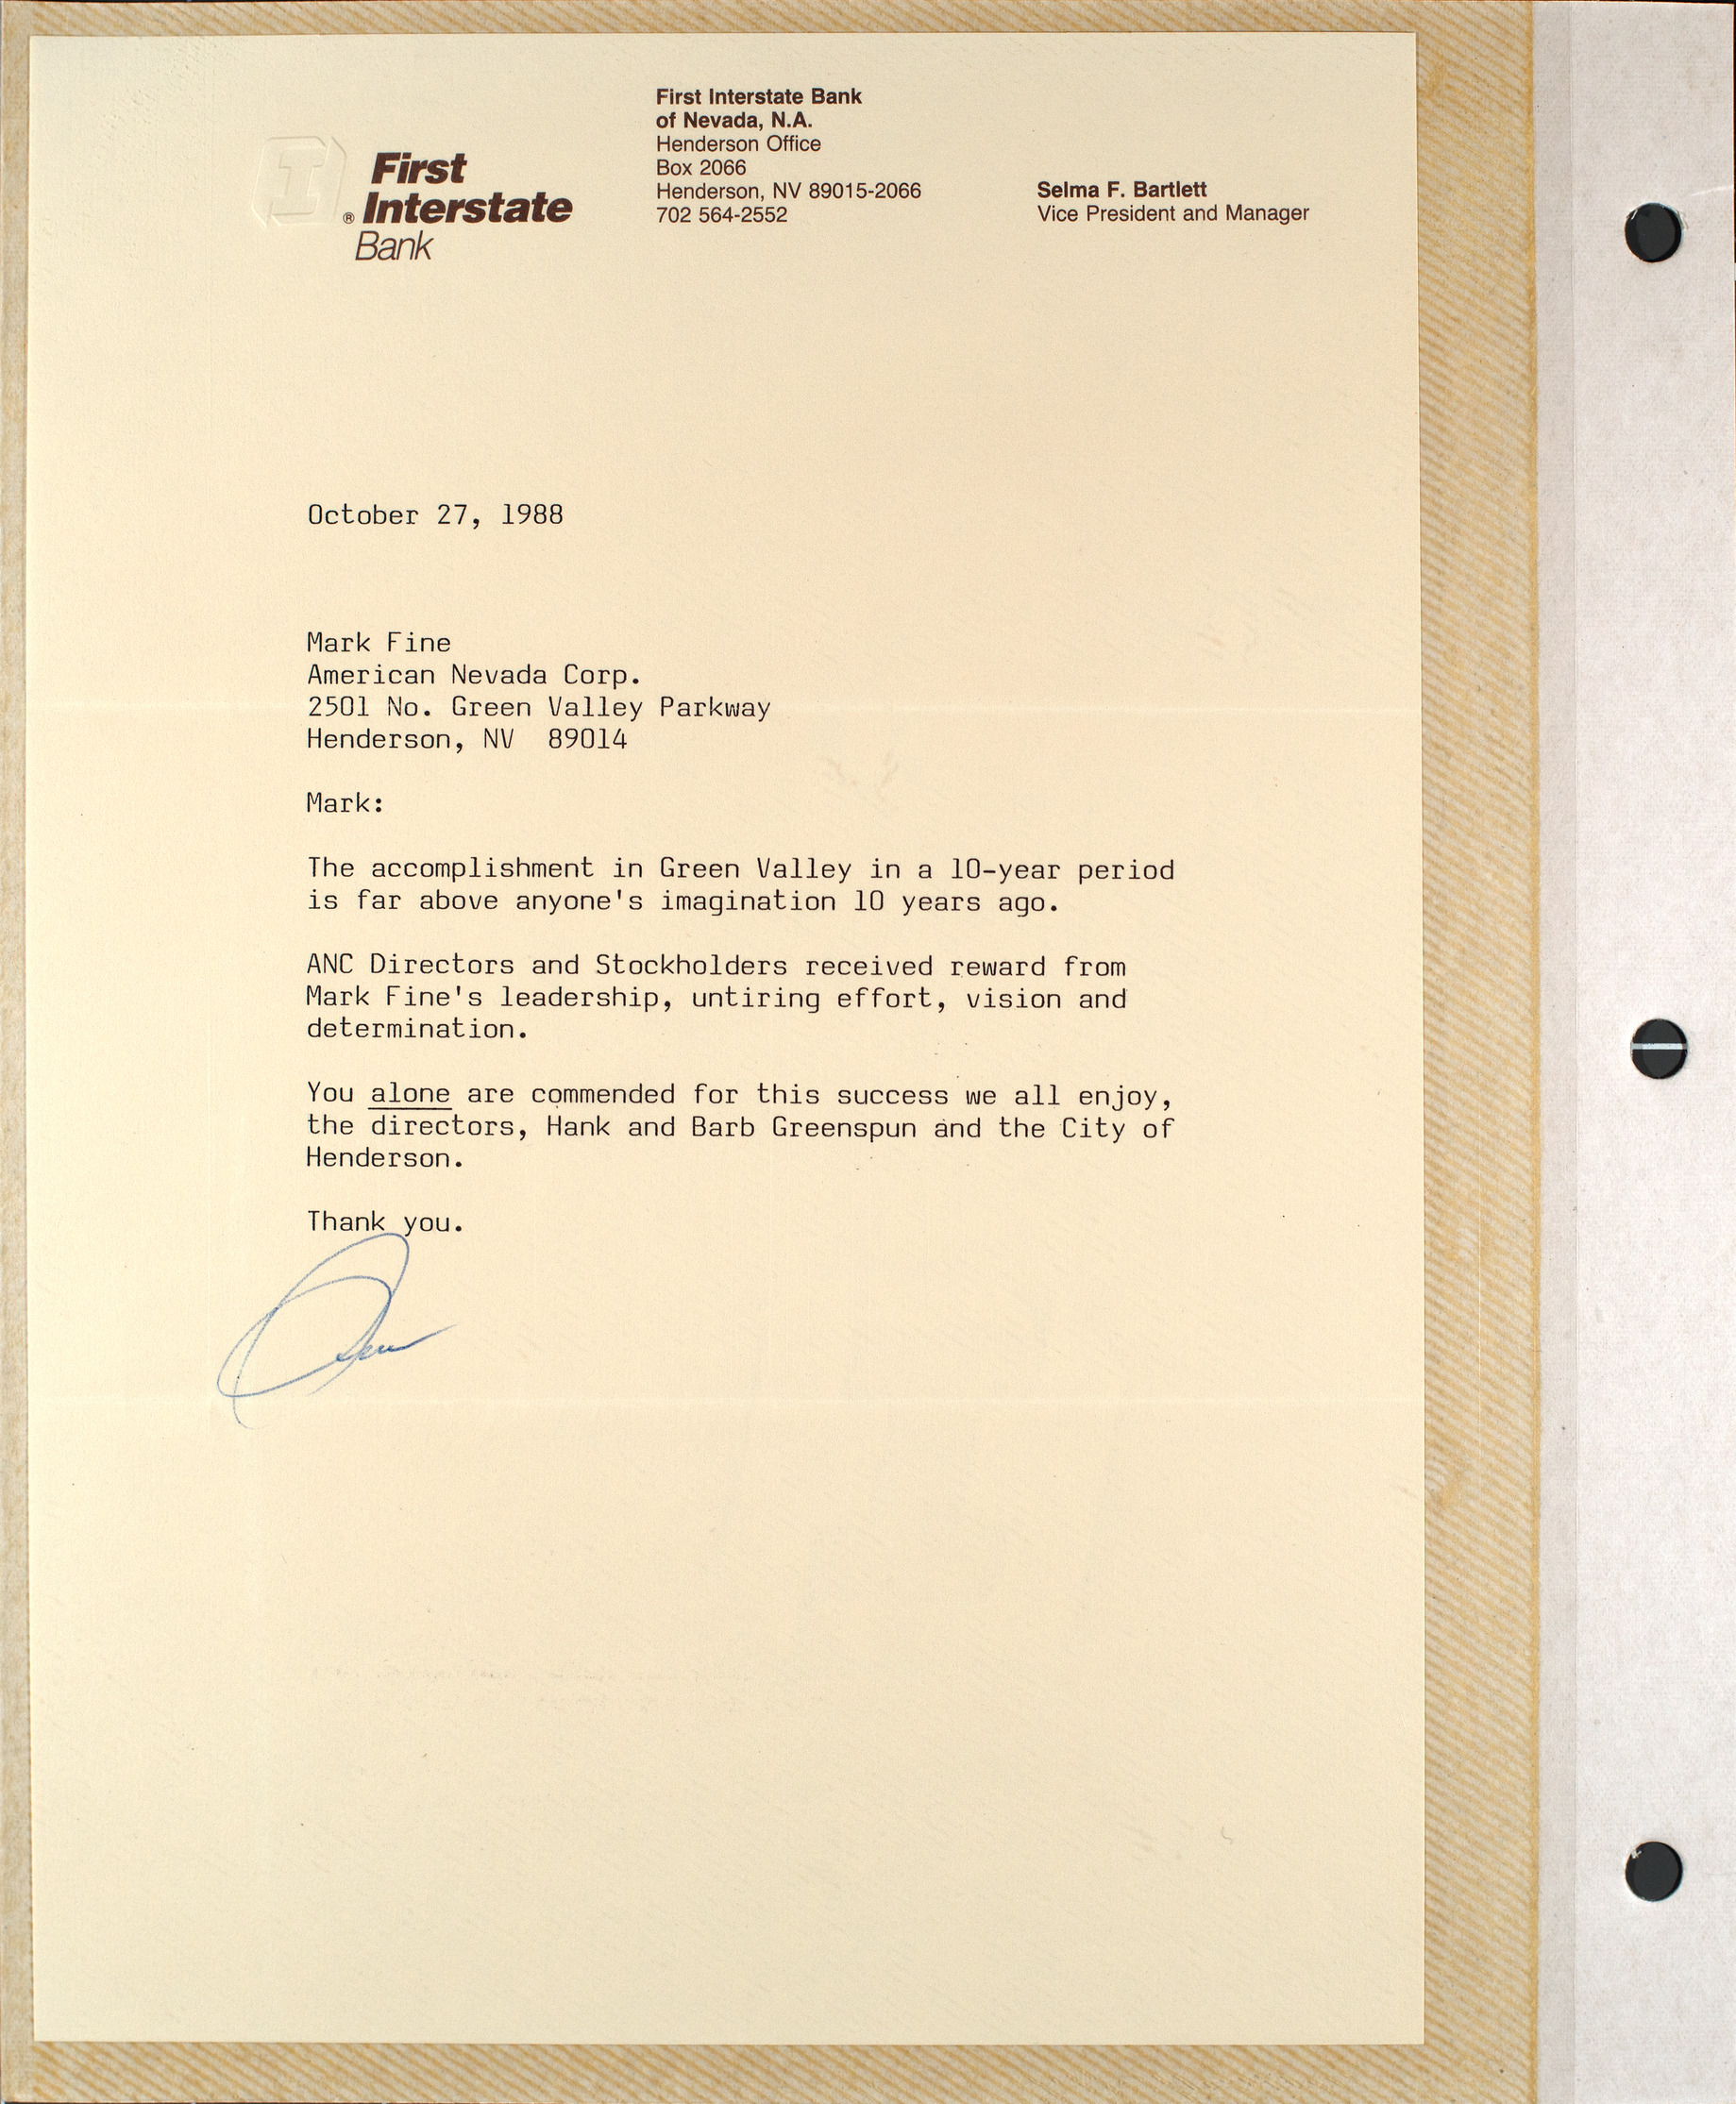 Letter from Selma Bartlett to Mark Fine, October 27, 1988